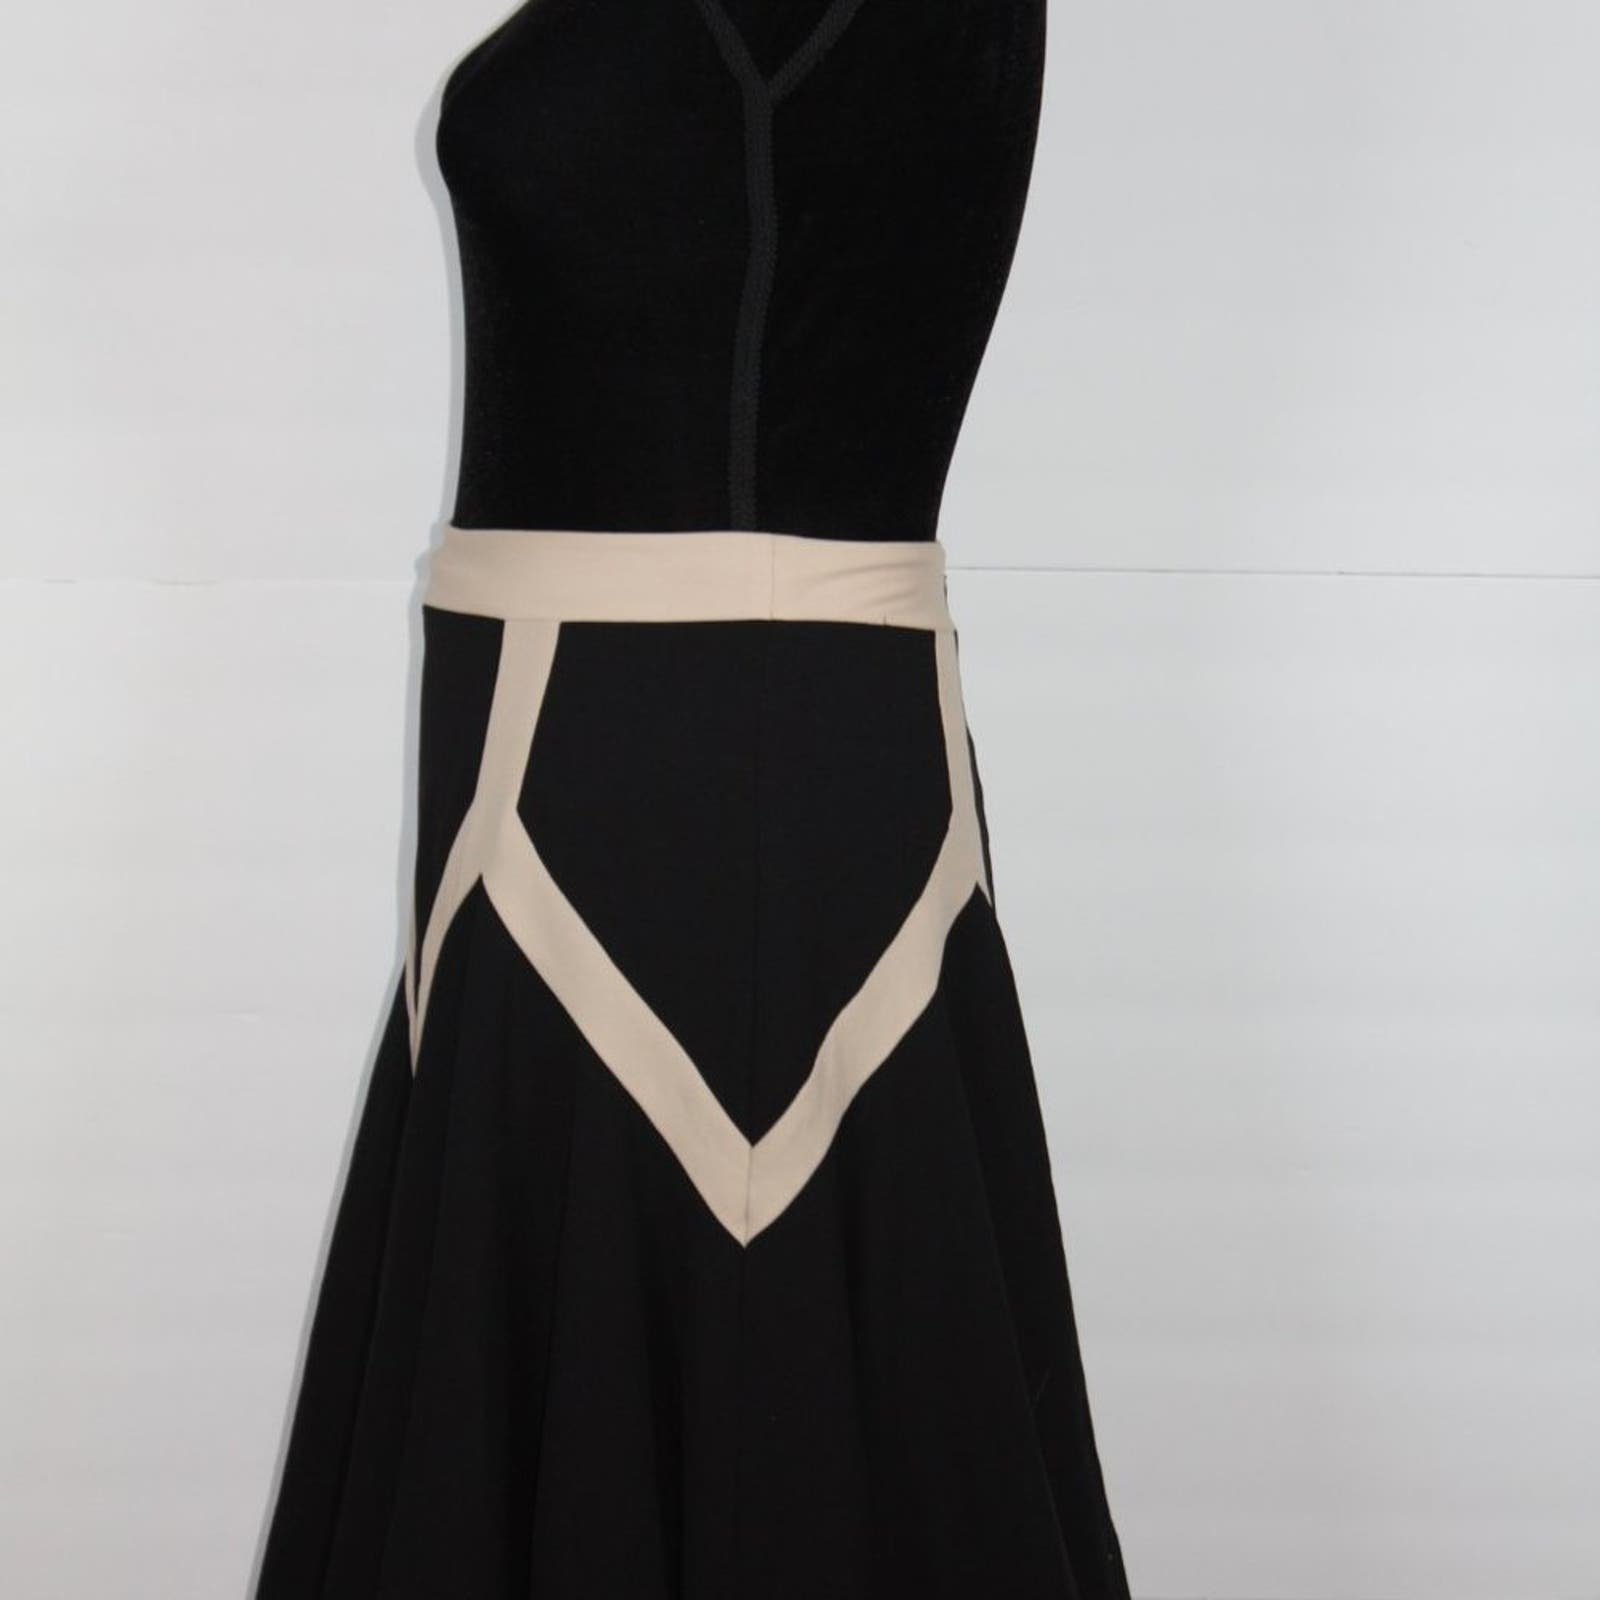 Latest  Leifsdottir Black Skirt with Geometric Design Size 4 oyL2ekCYn just for you